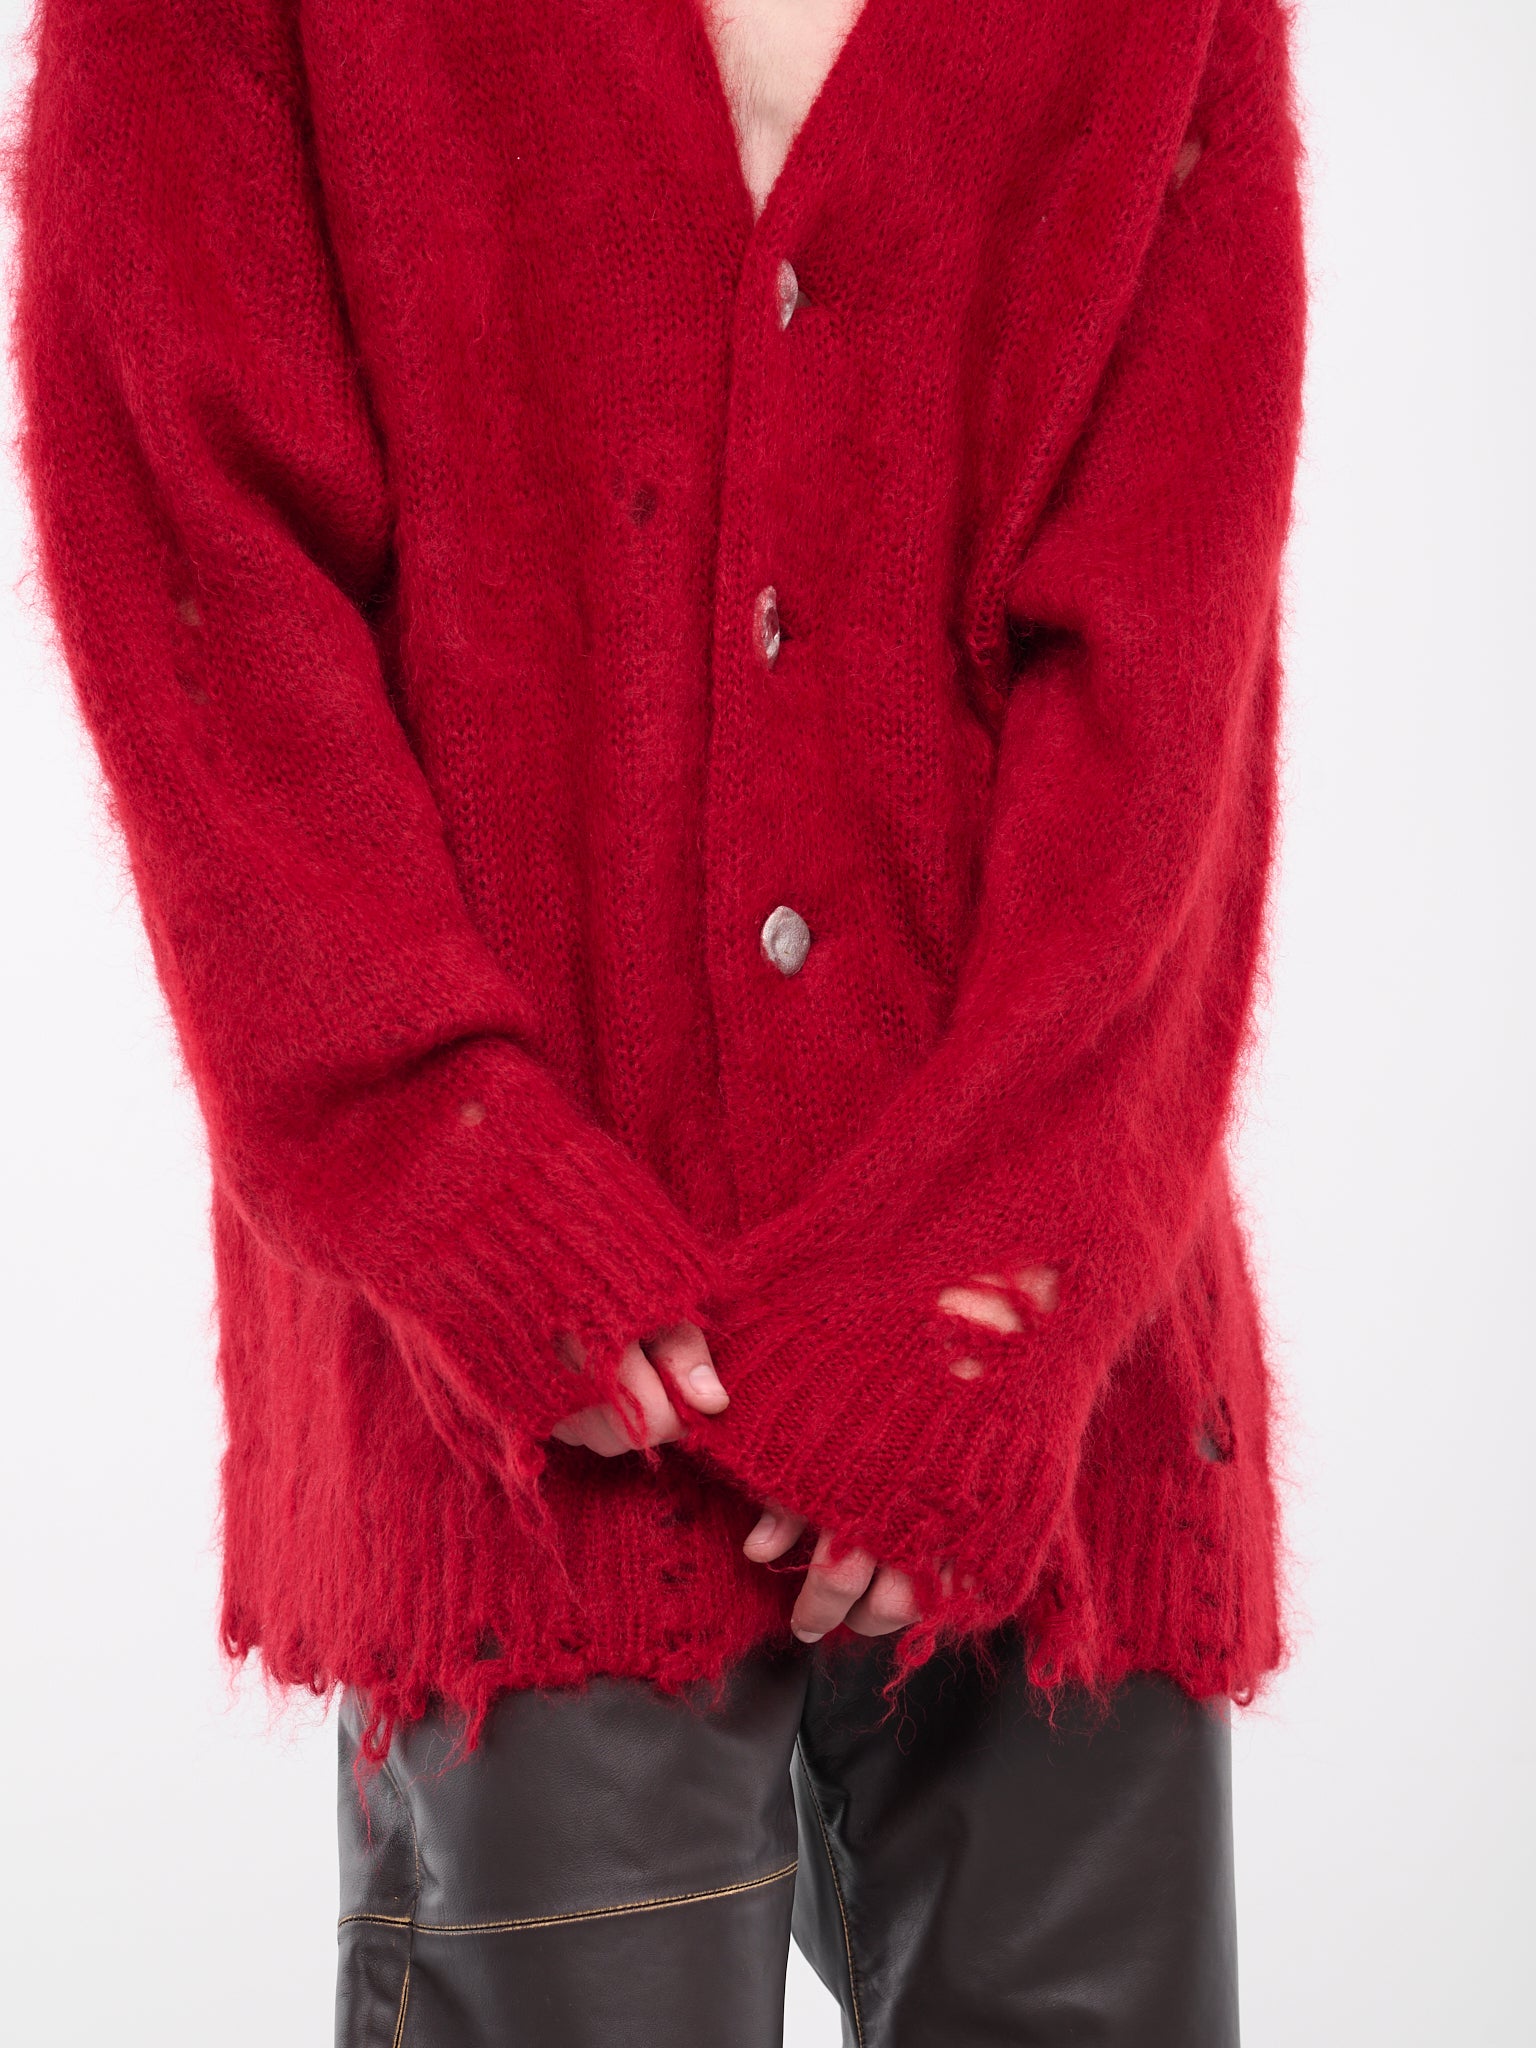 Distressed Knit Cardigan (KT01-RED)